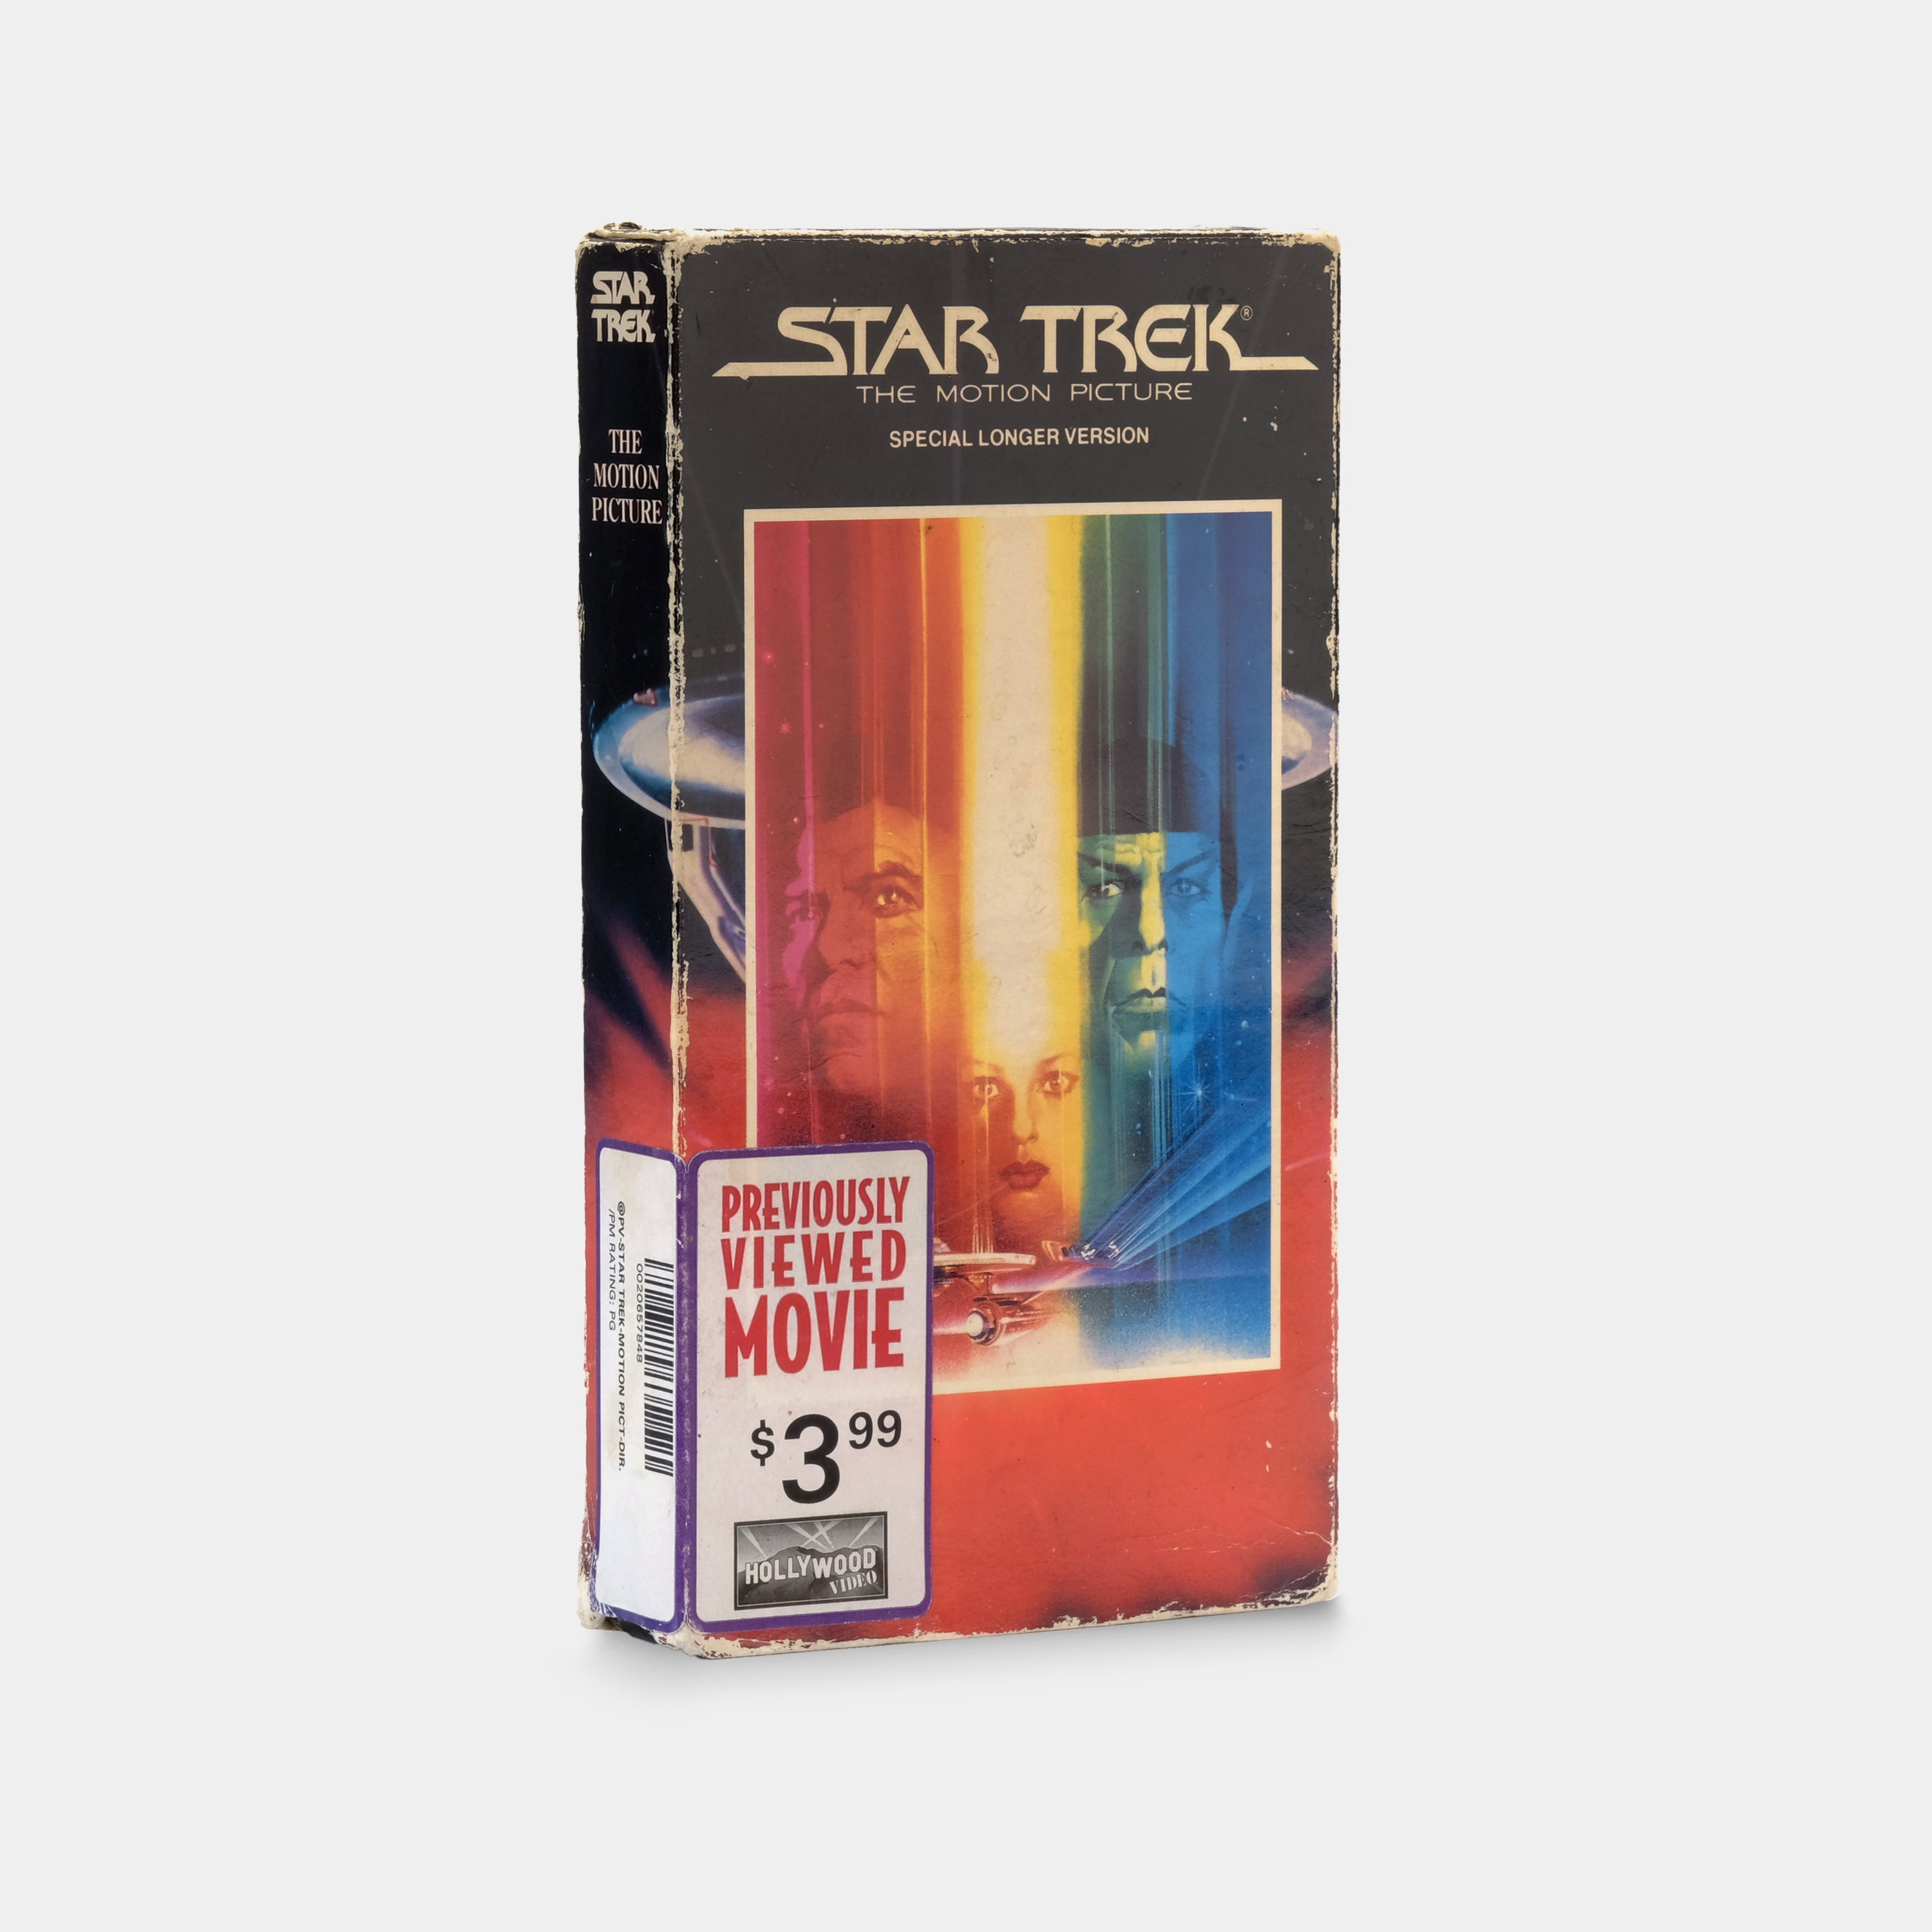 Star Trek: The Motion Picture (Special Longer Version) VHS Tape